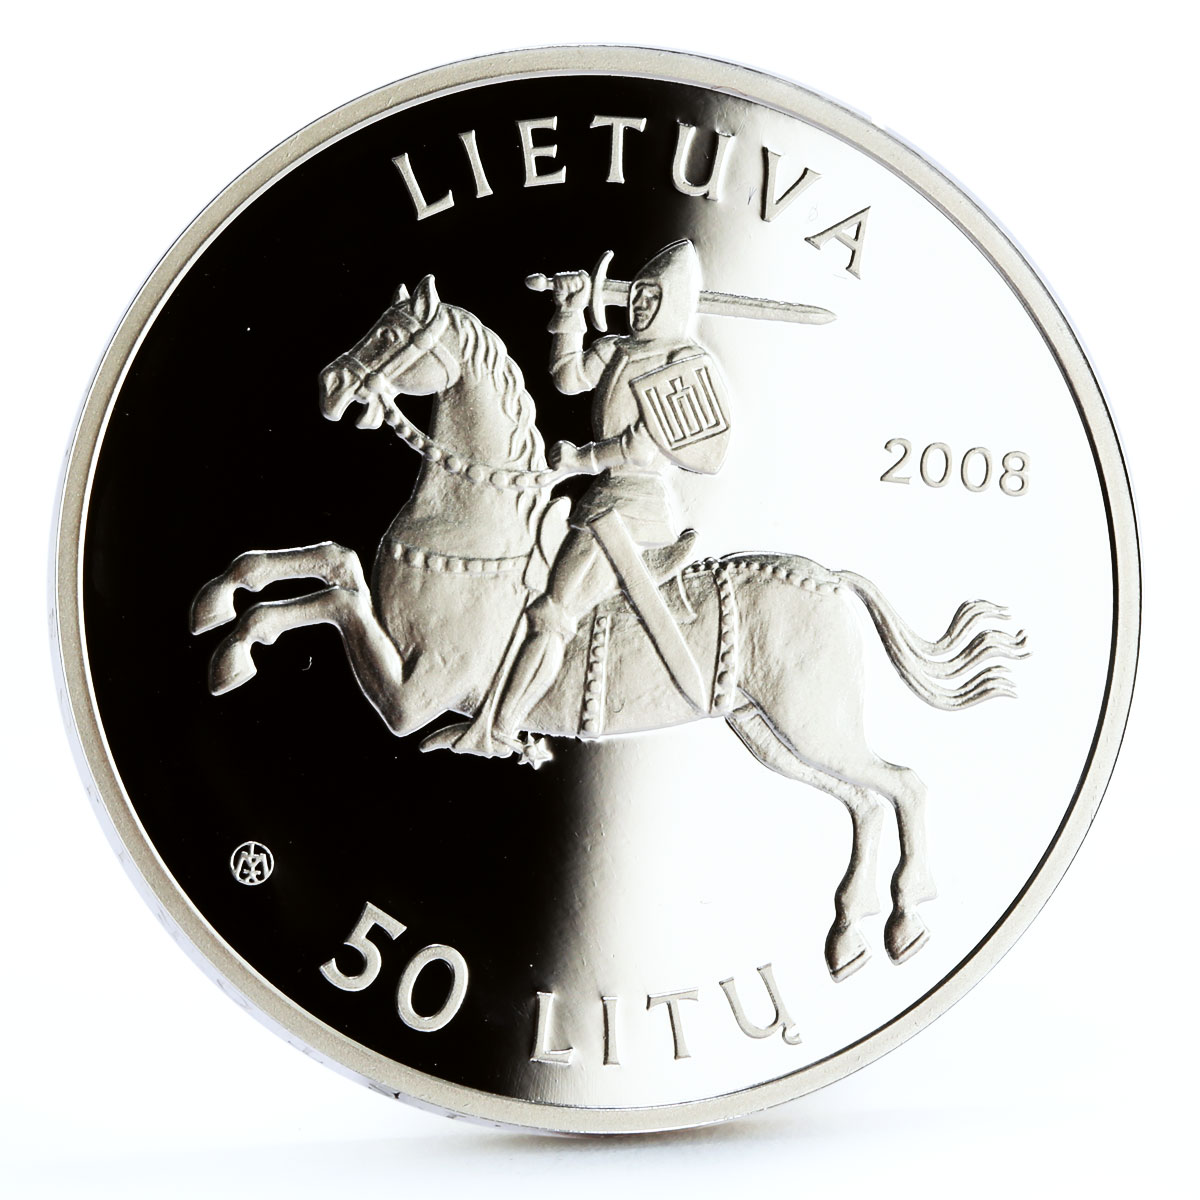 Lithuania 50 litu Kaunas Castle Towers Fortress Palace proof silver coin 2008